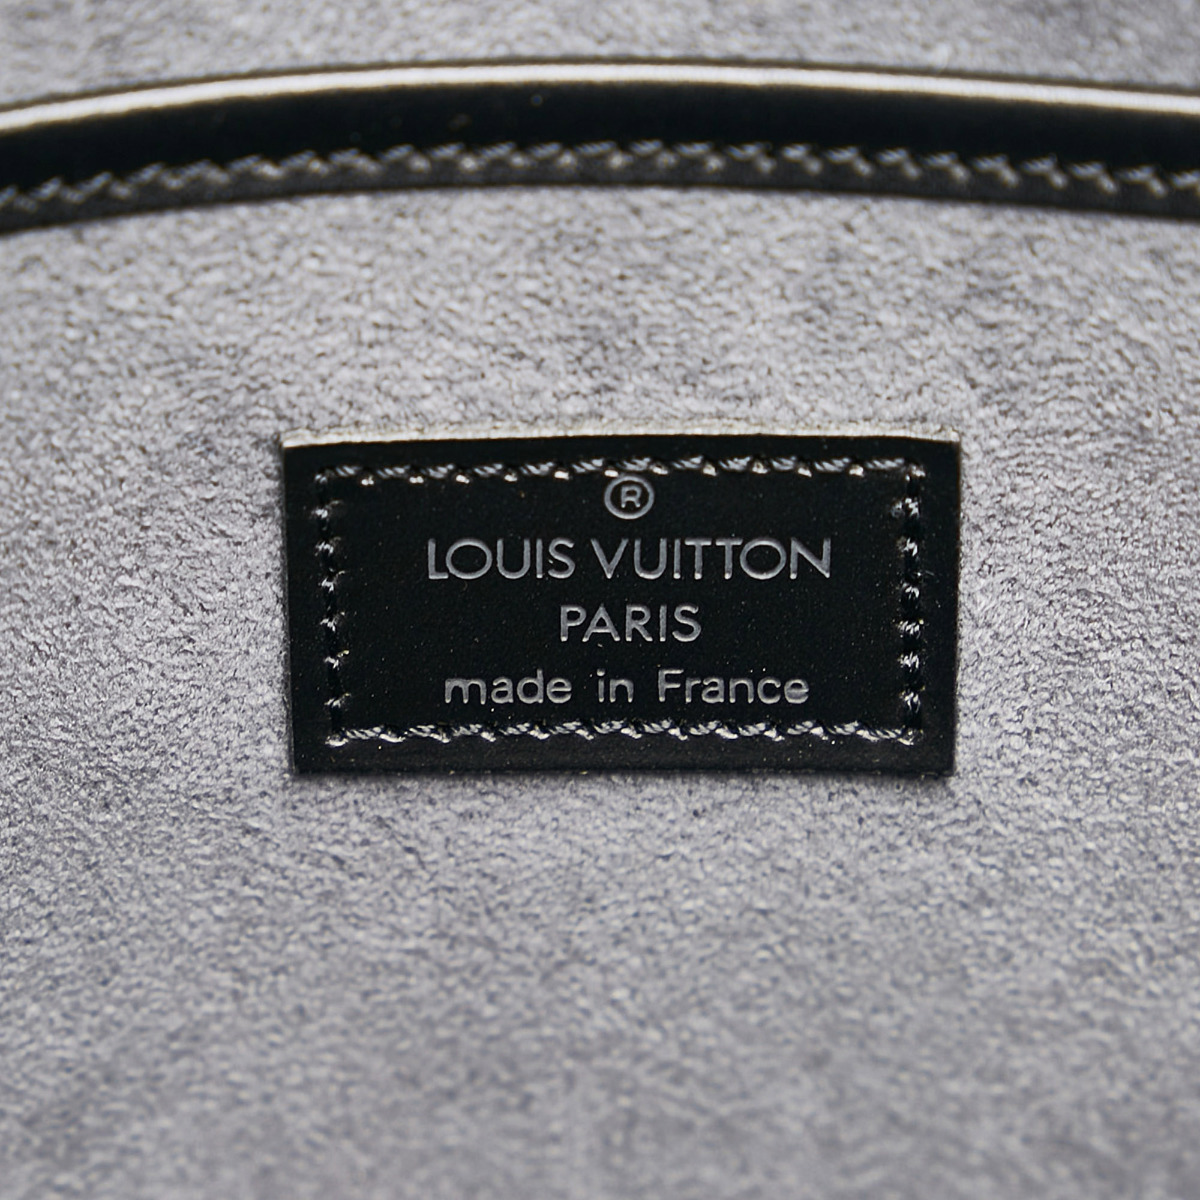 Chanel-Vuitton, Sale n°2140, Lot n°43